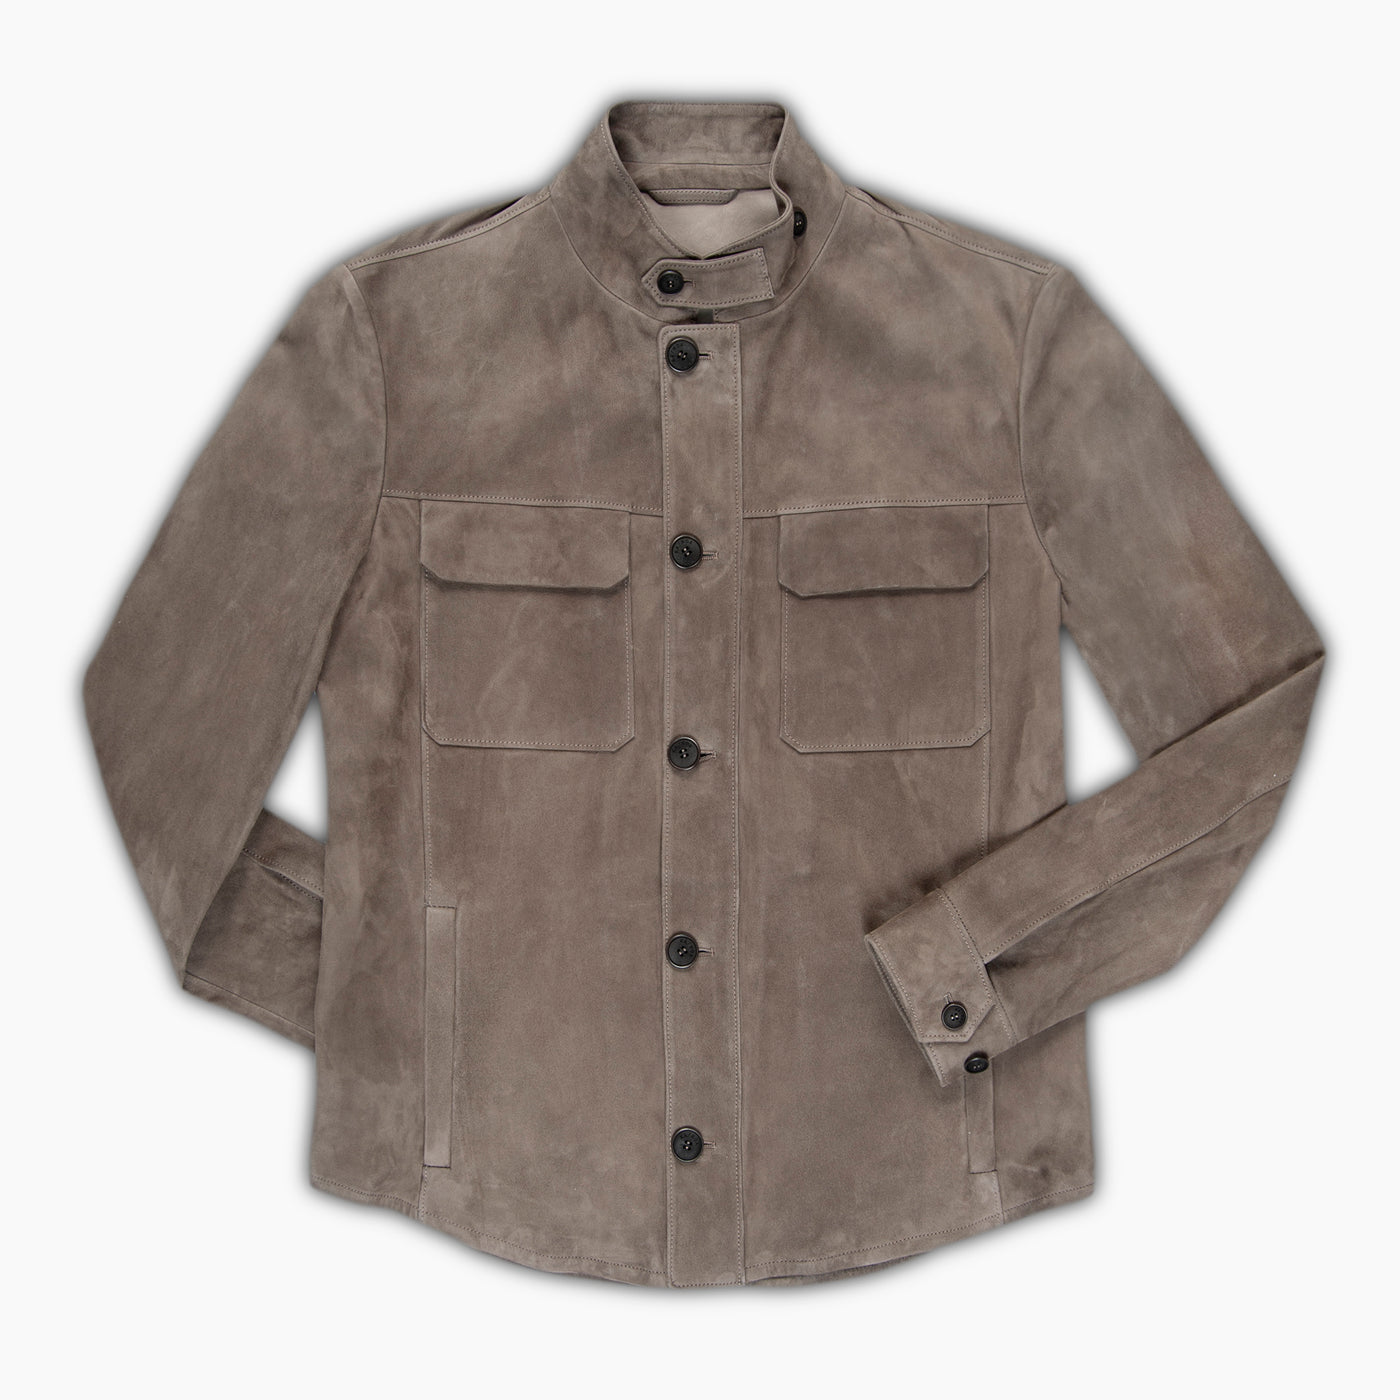 Leopold jacket shirt